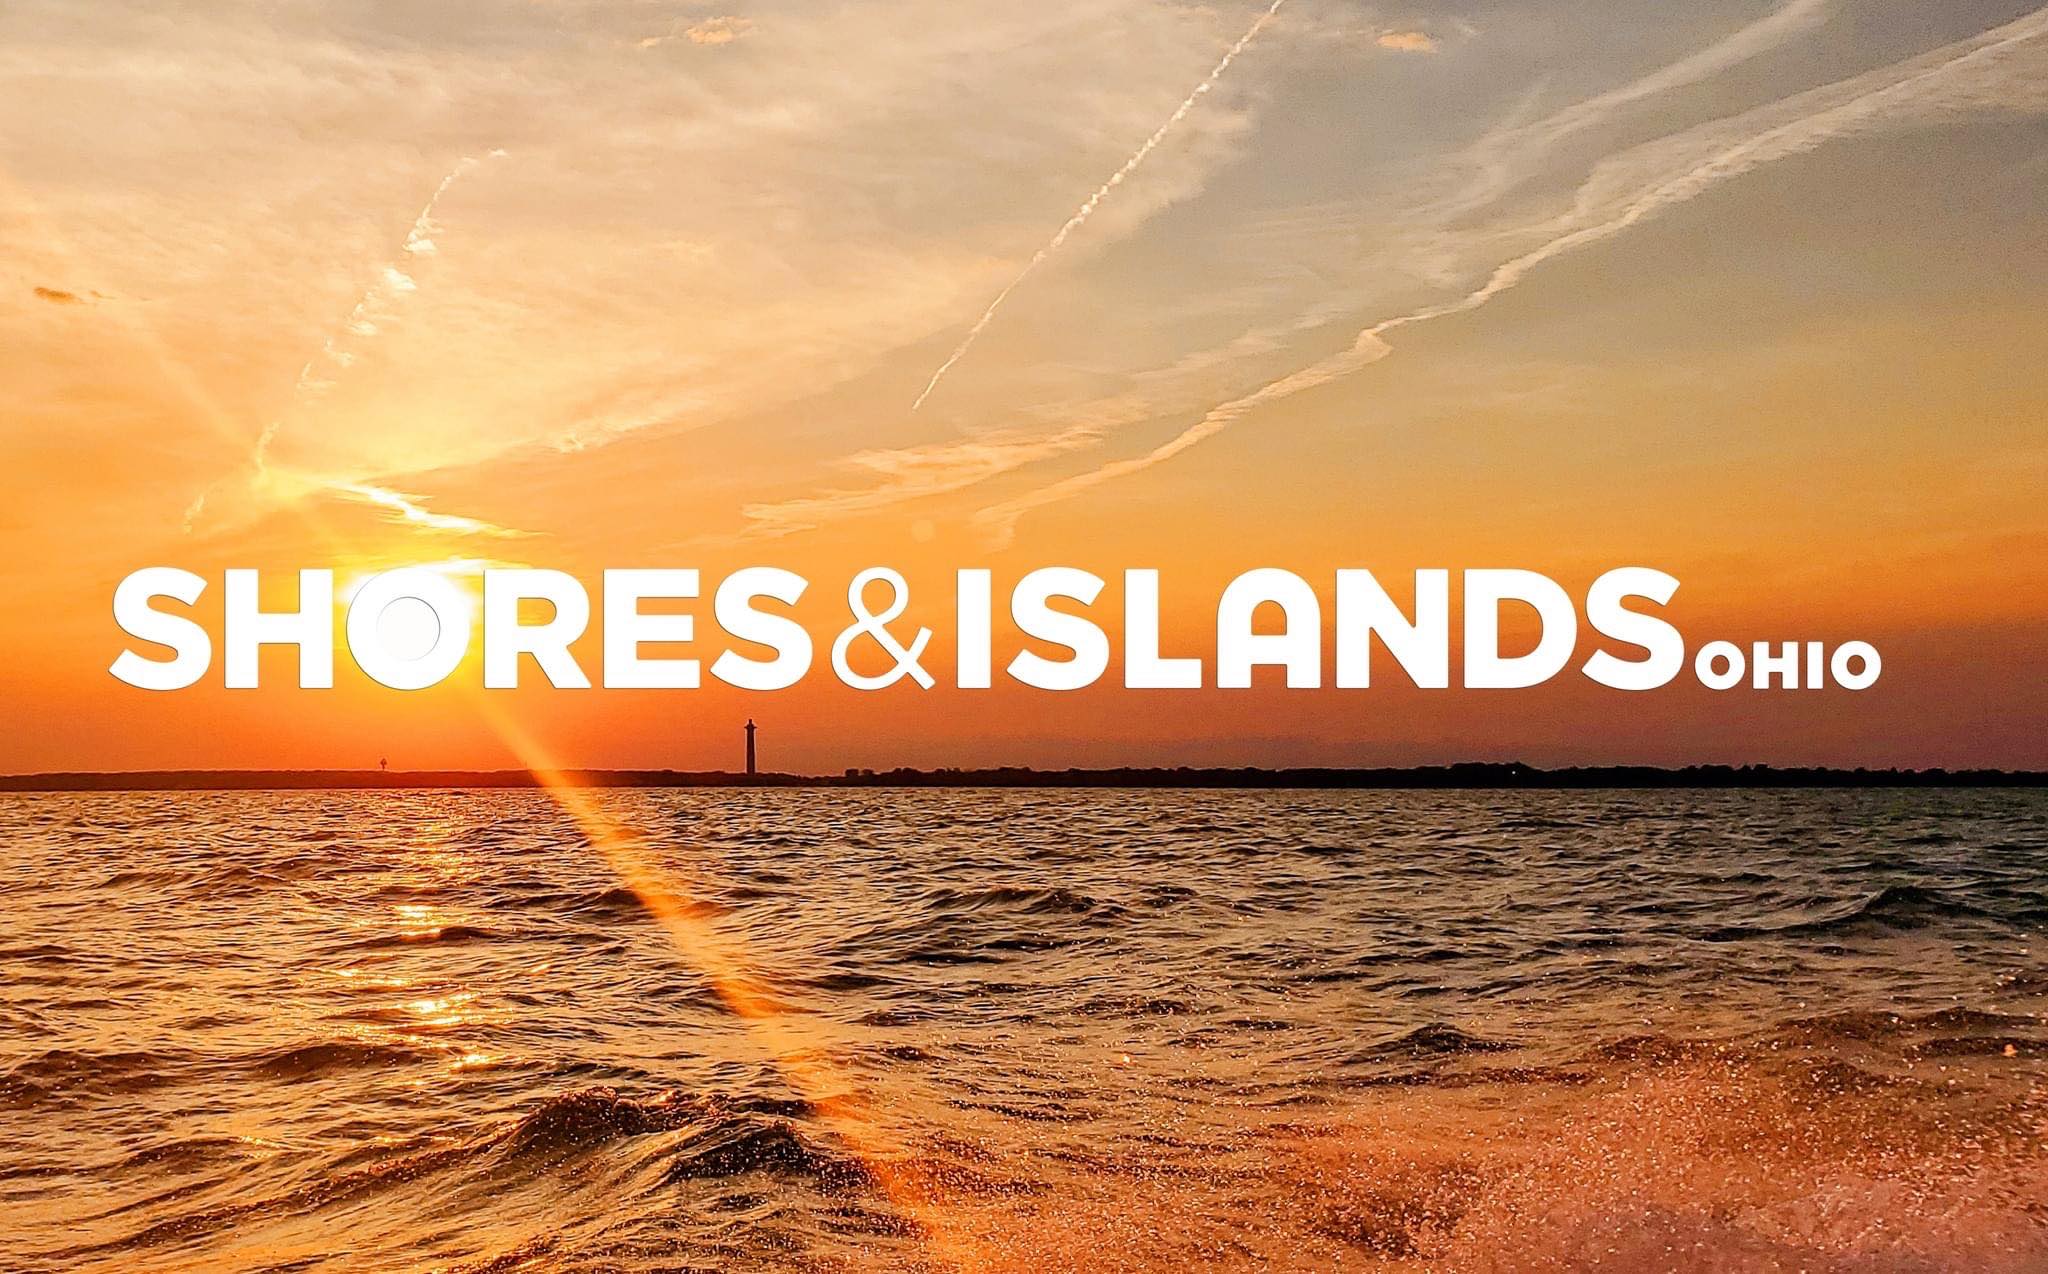 Shores & Islands Ohio Announces New Website